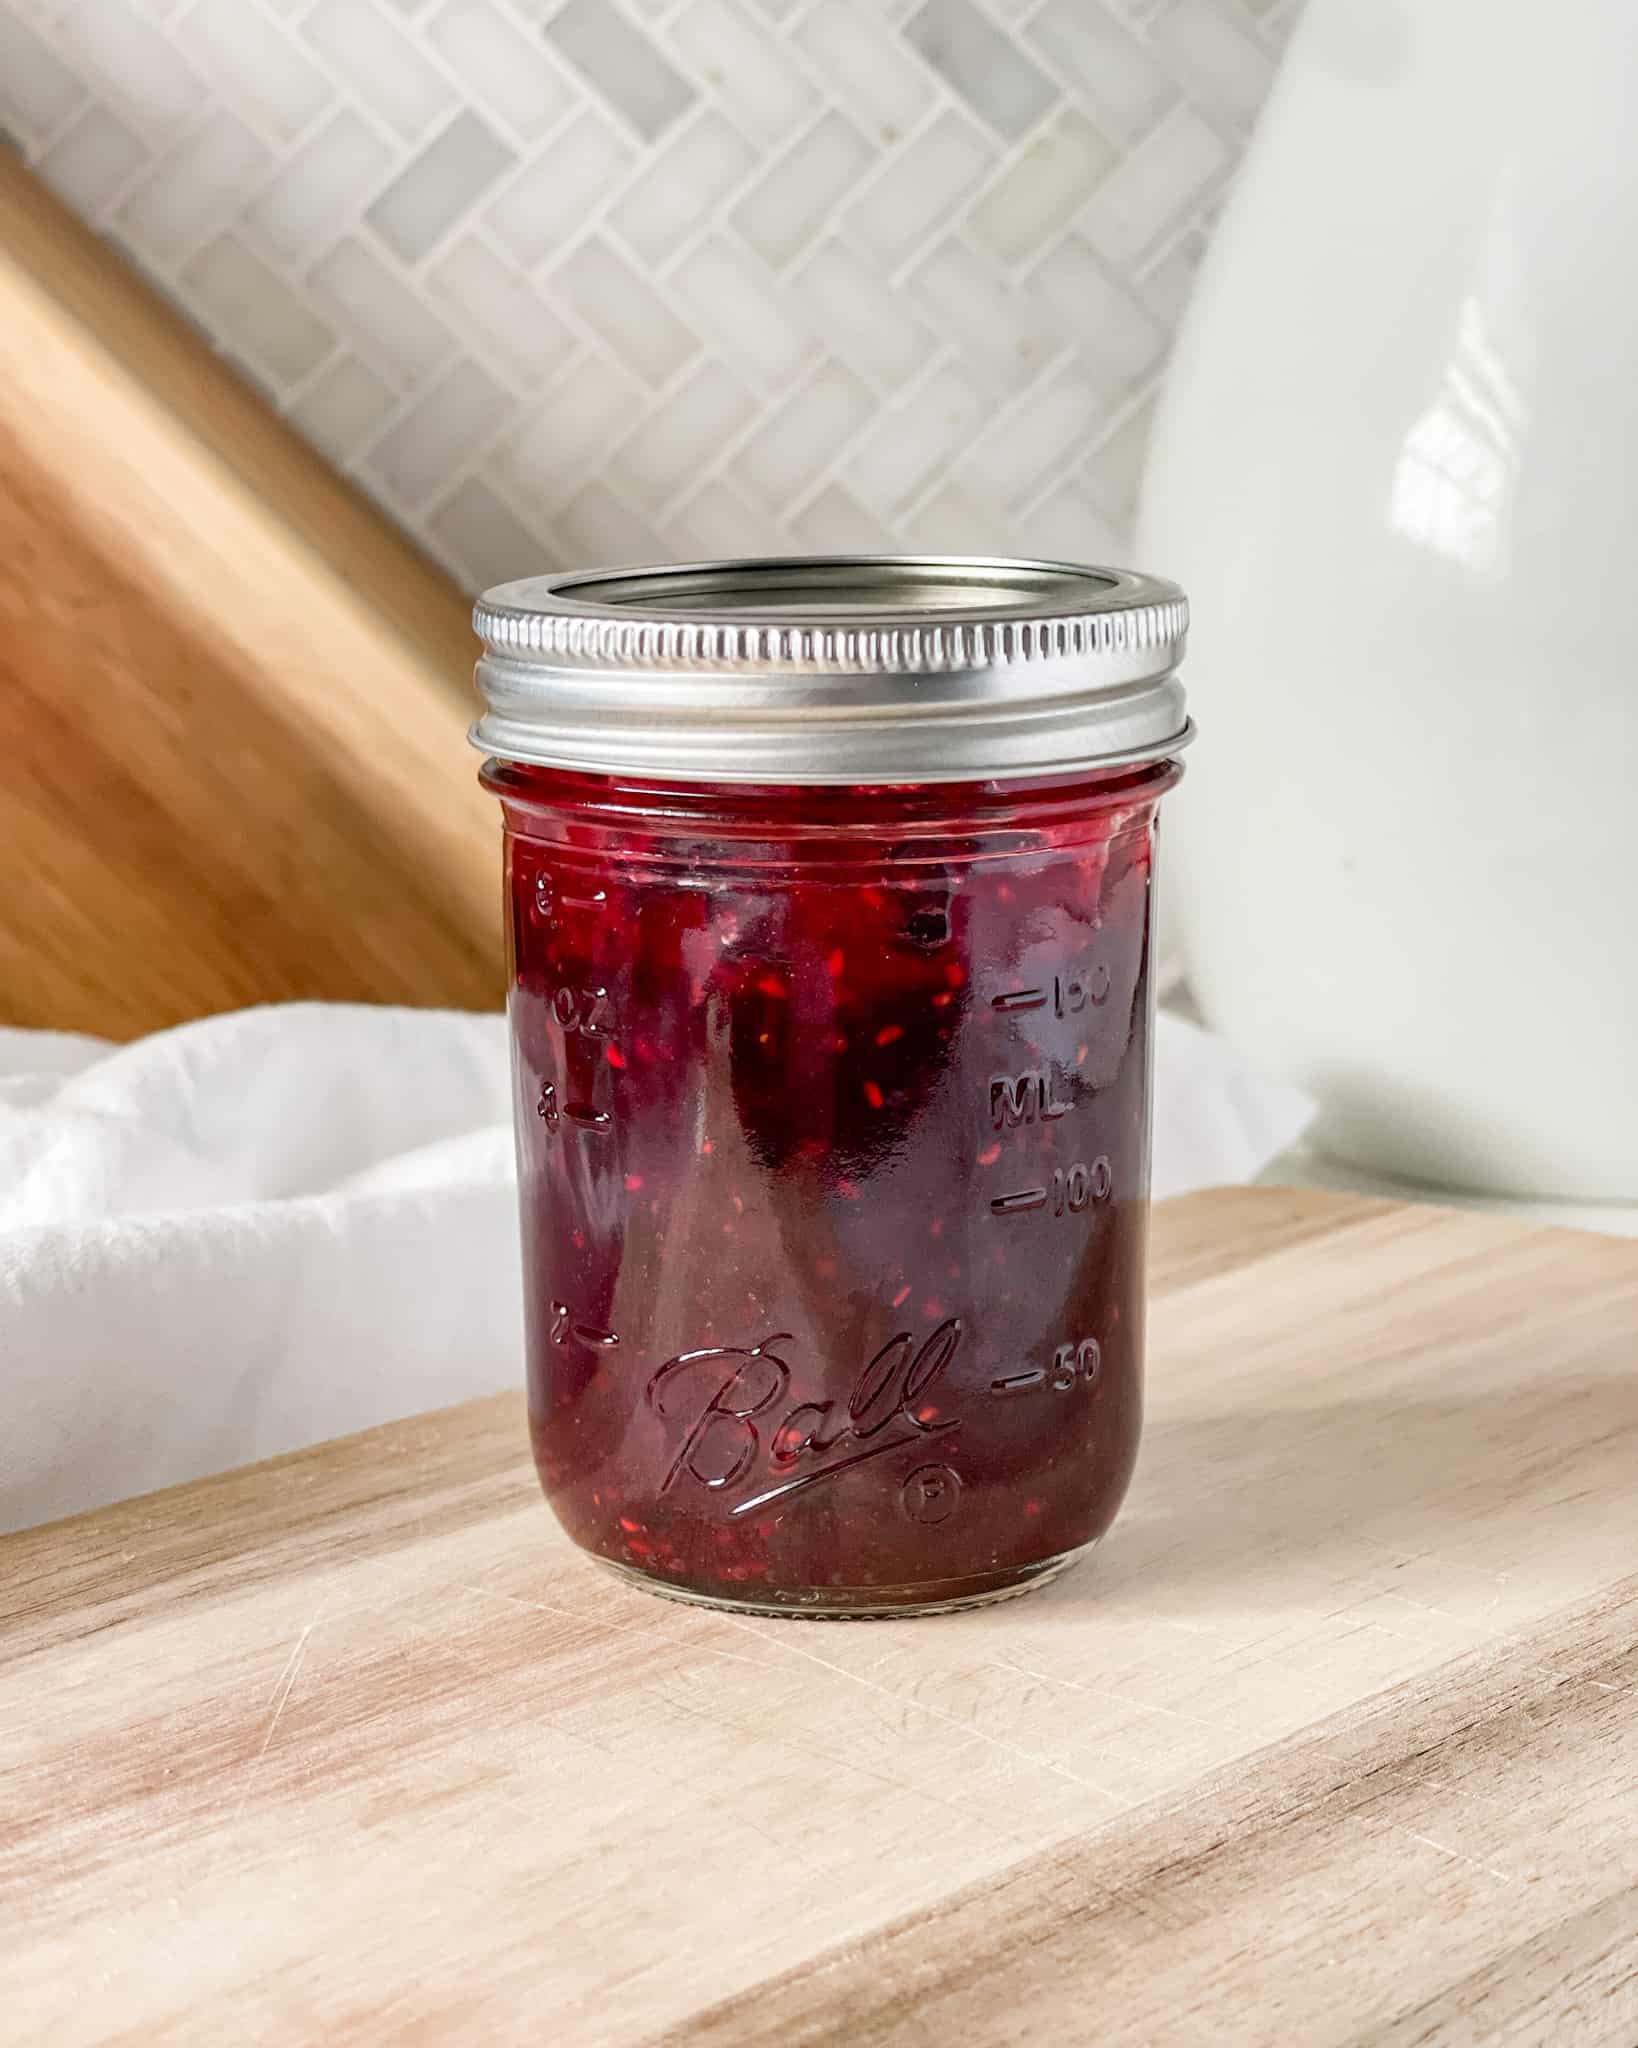 Mixed Berry Jam in a glass mason jar